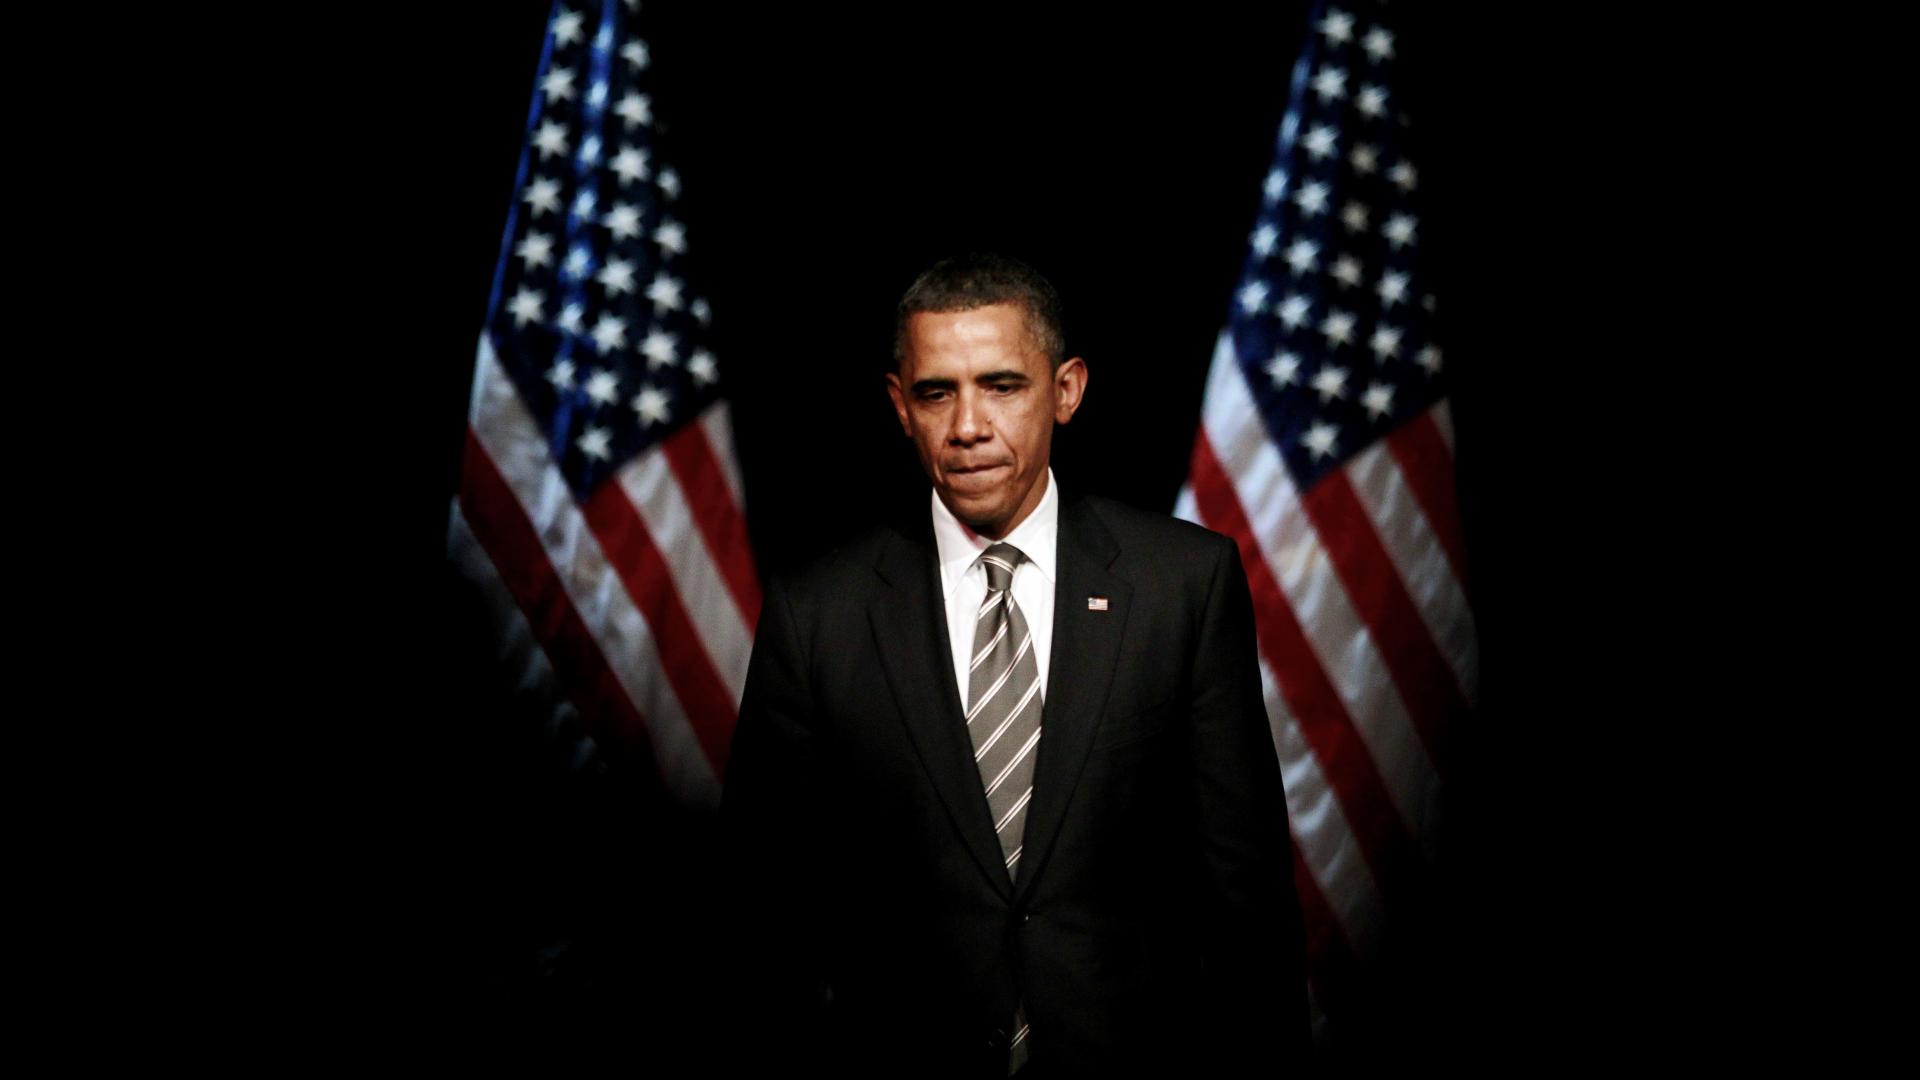 Barack Obama Wallpaper HD Q4959f8 4usky